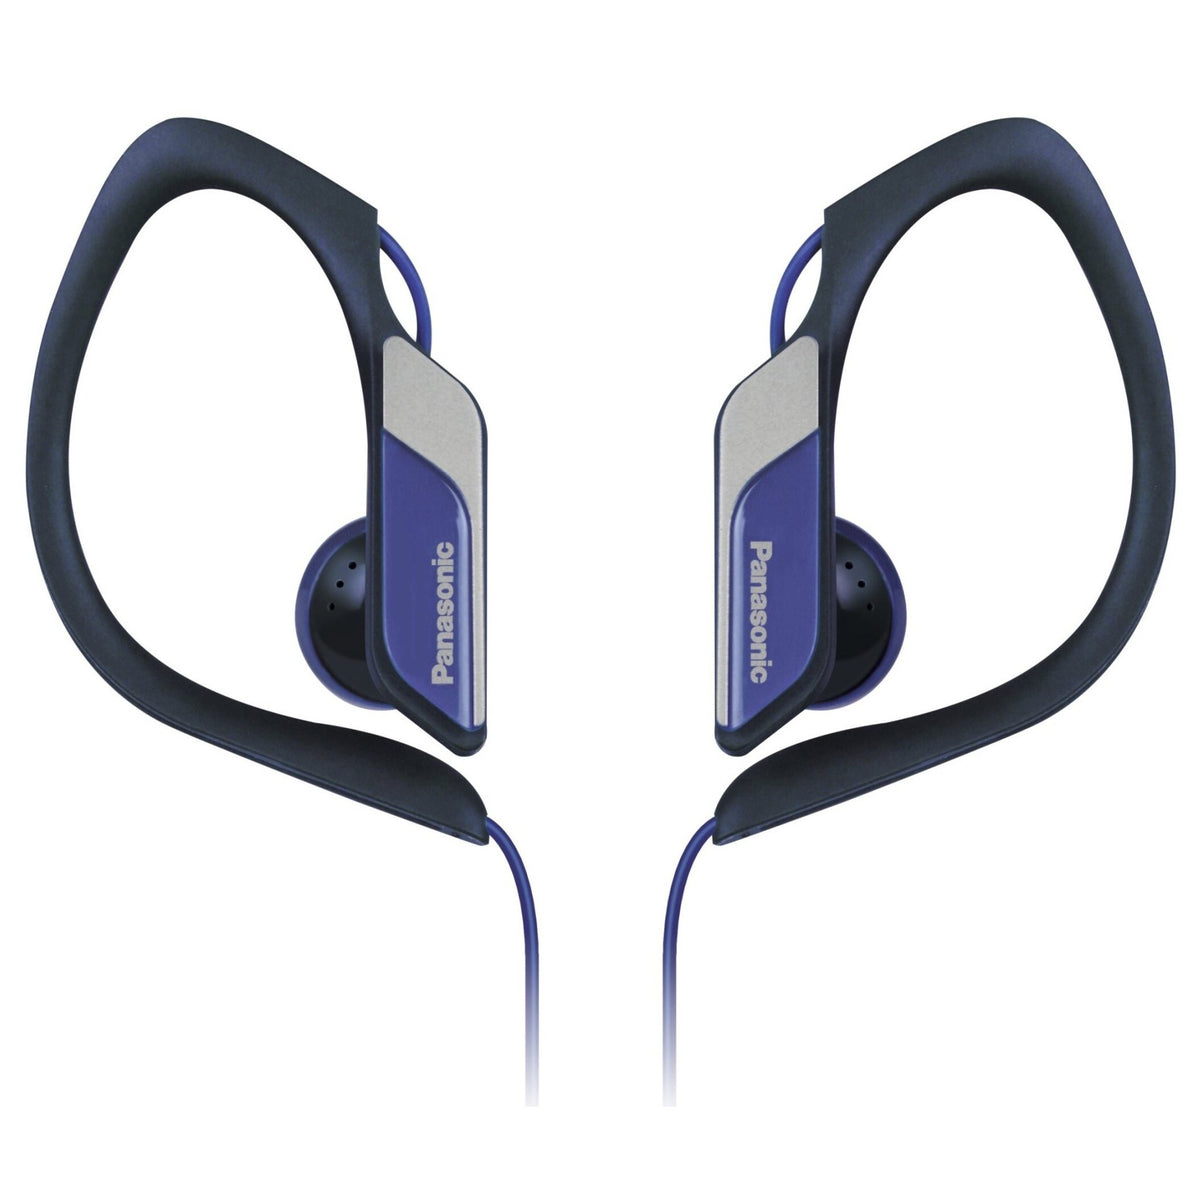 Sluchátka do uší Panasonic RP-HS34E-A, černo-modrá